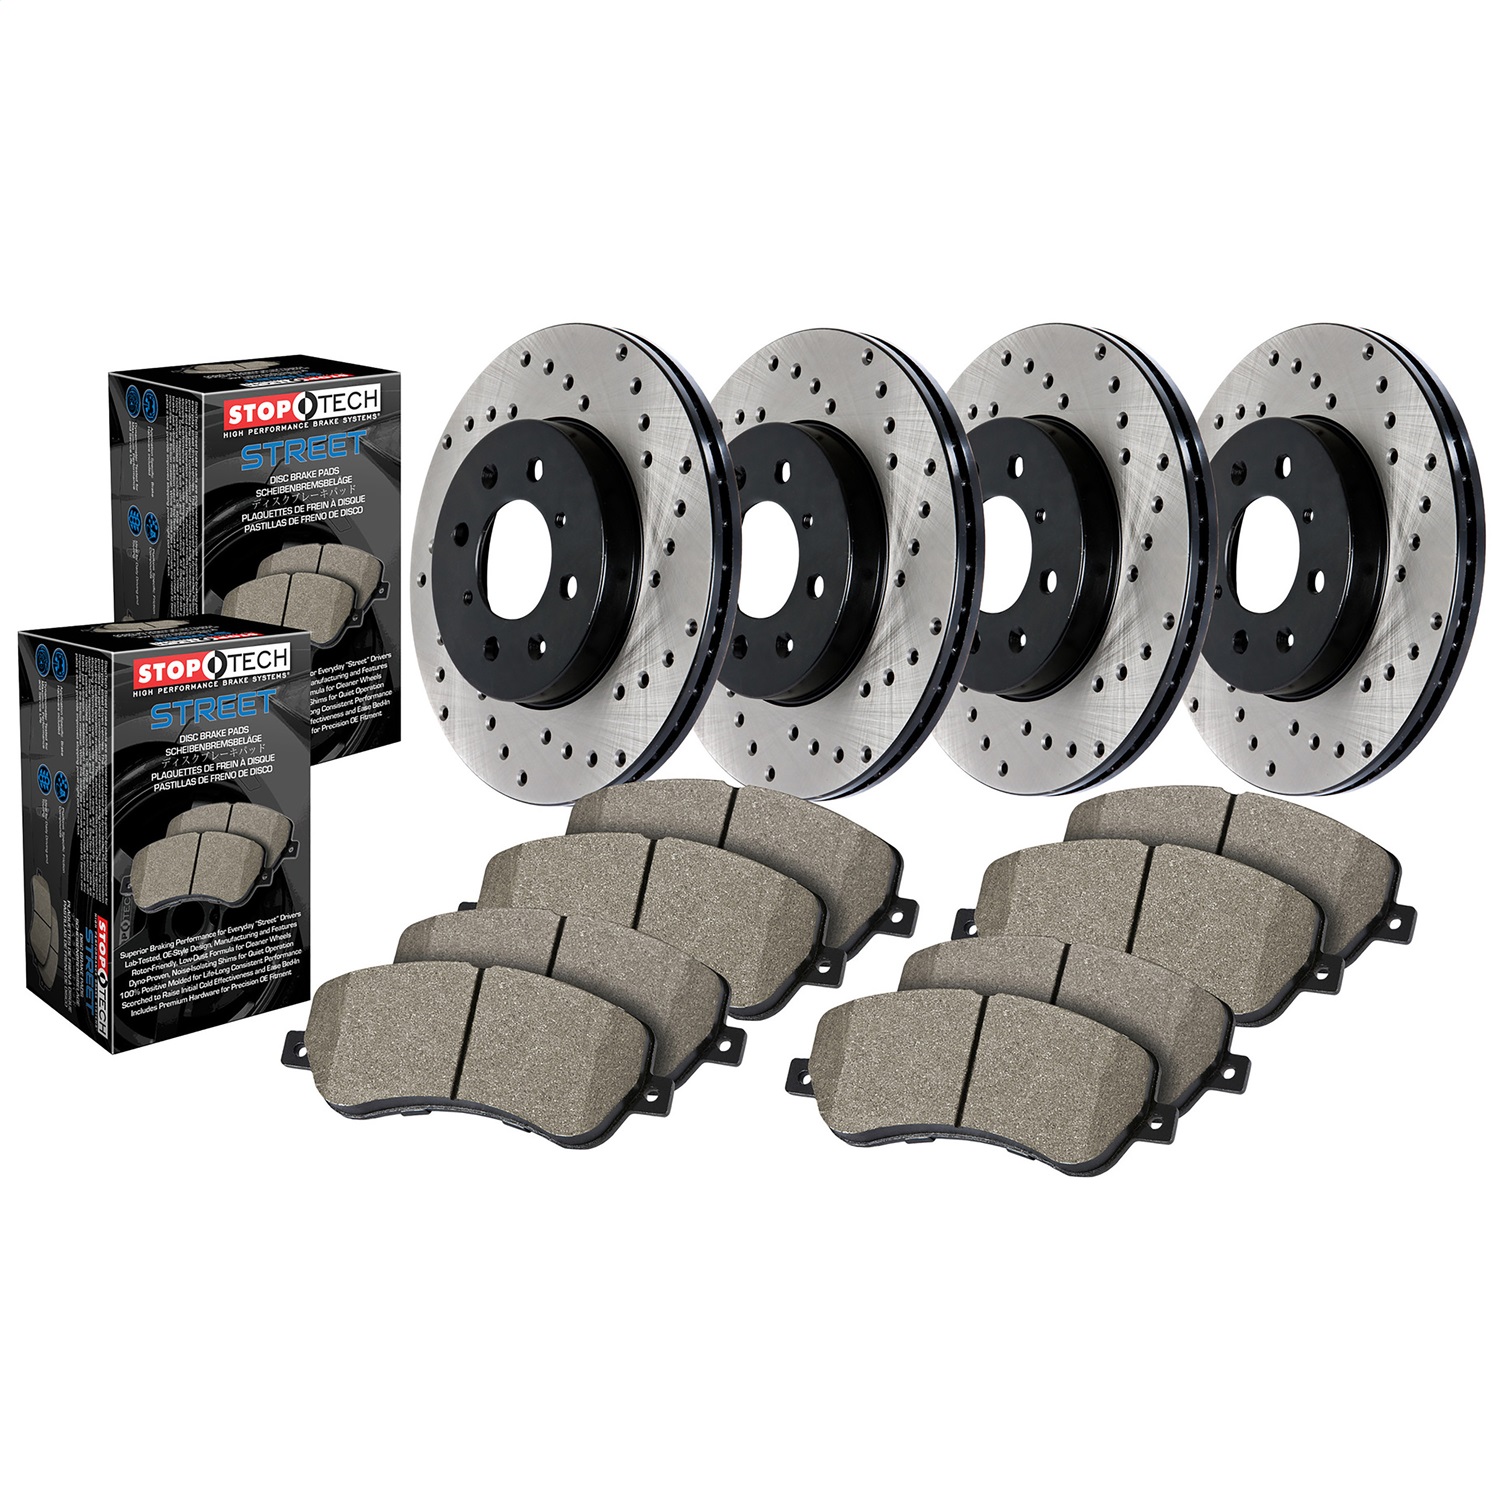 StopTech 936.40035 Street - 4 Wheel Disc Brake Kit w/Cross-Drilled Rotor